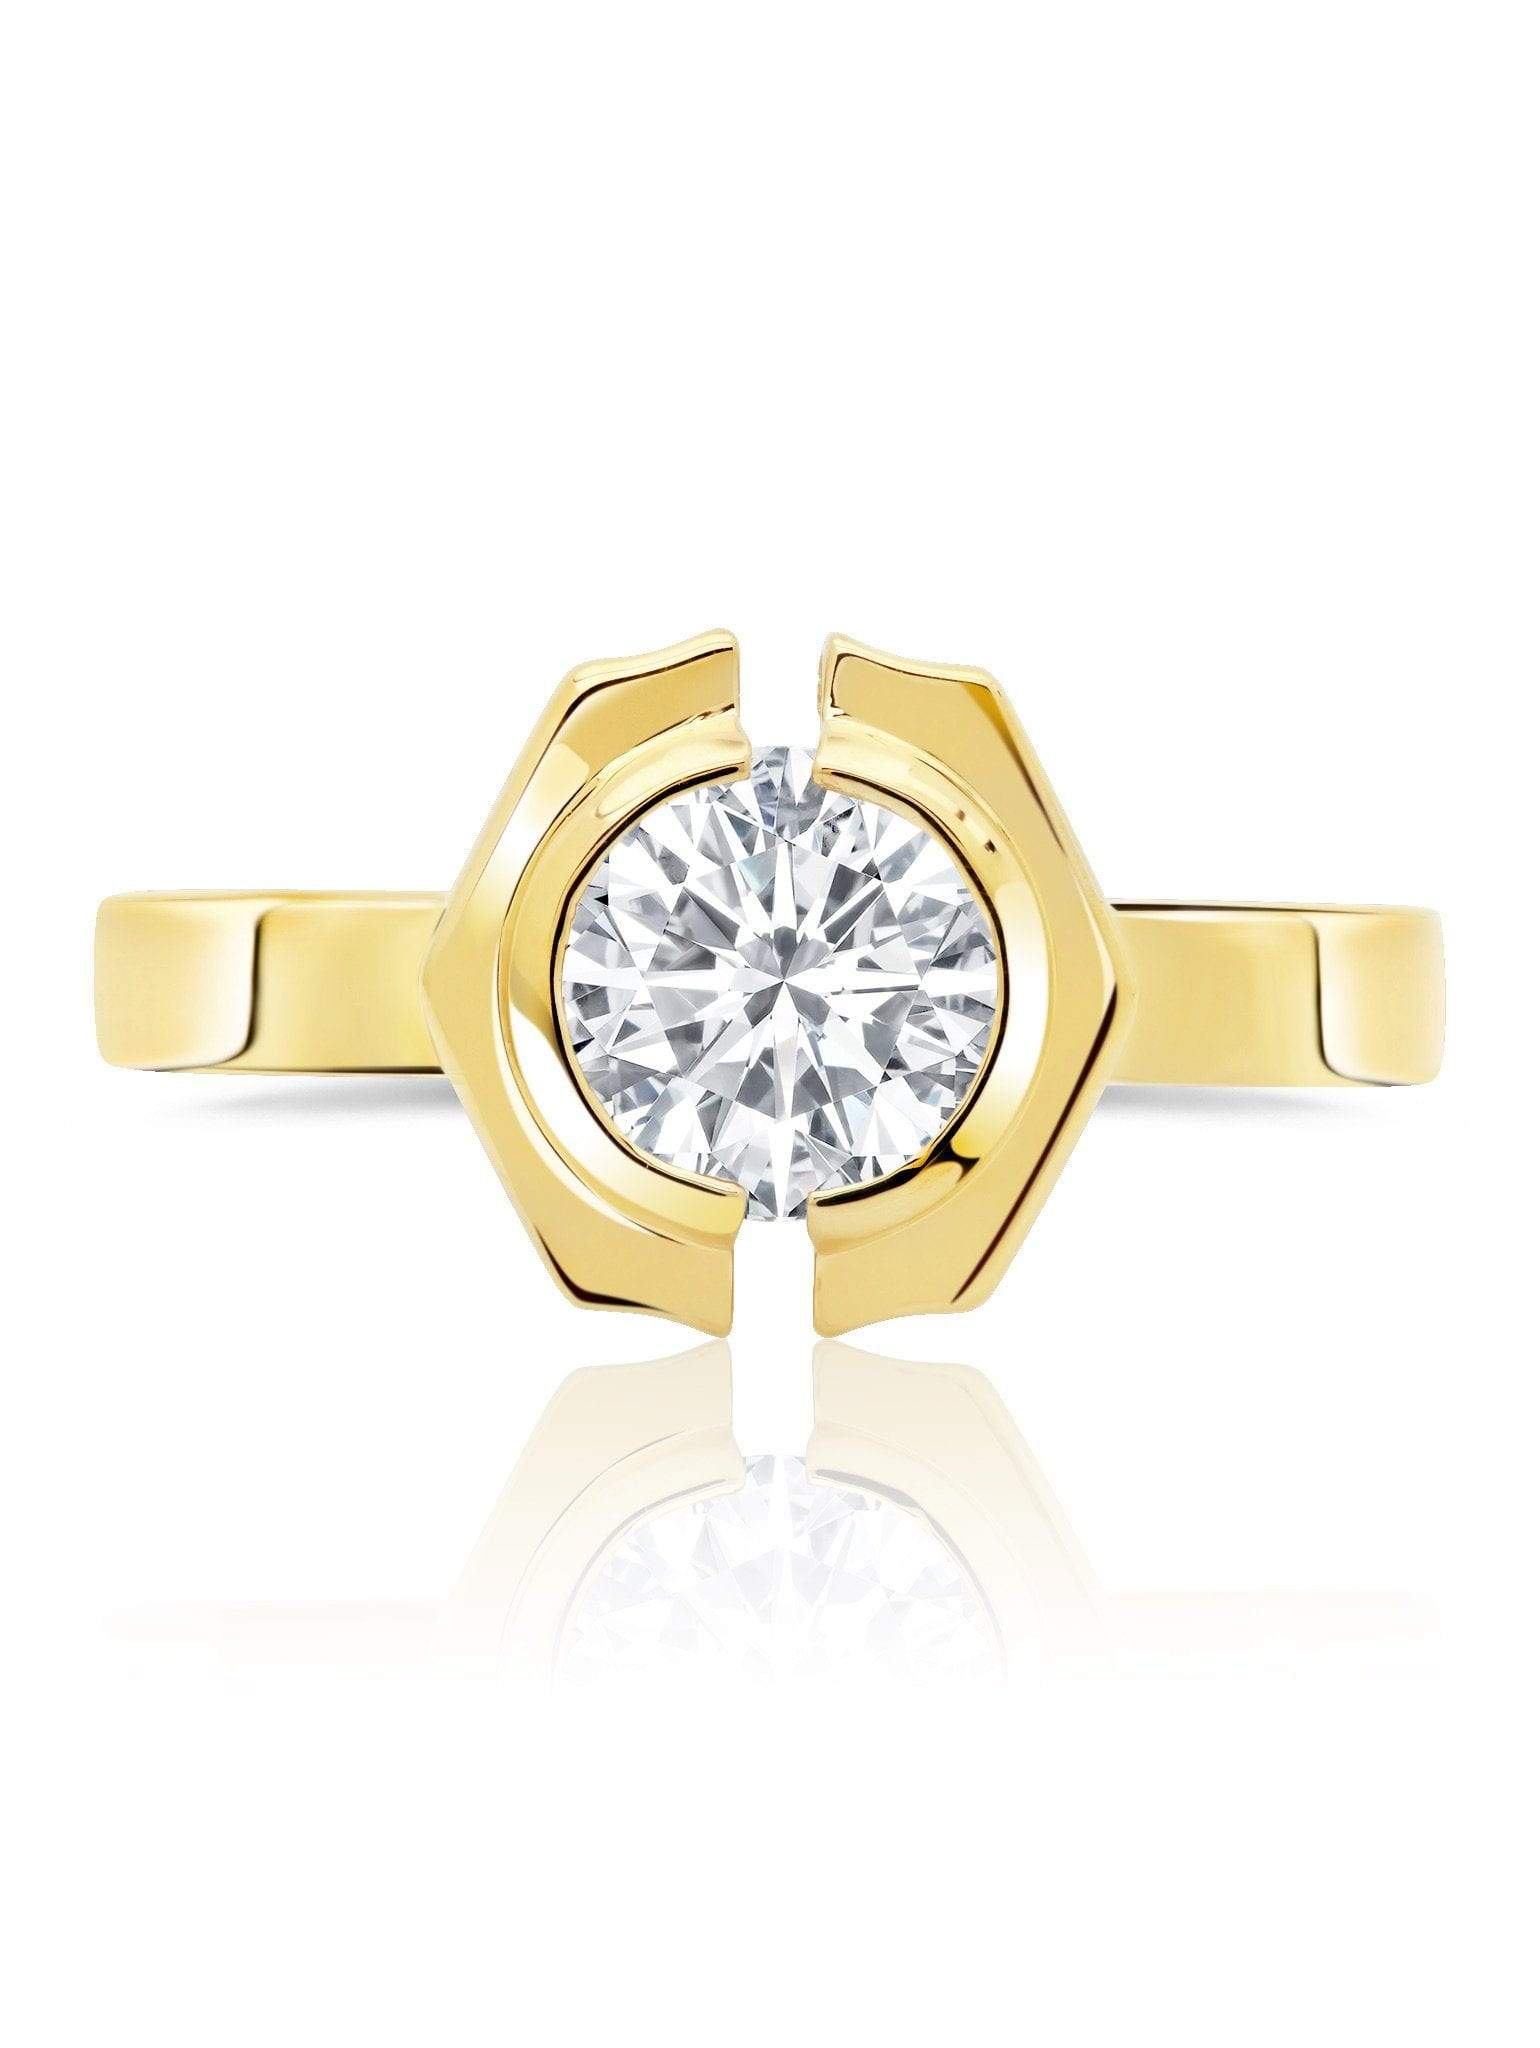 Crislu Jewelry Crislu Solara Ring finished in 18kt Gold Size 7